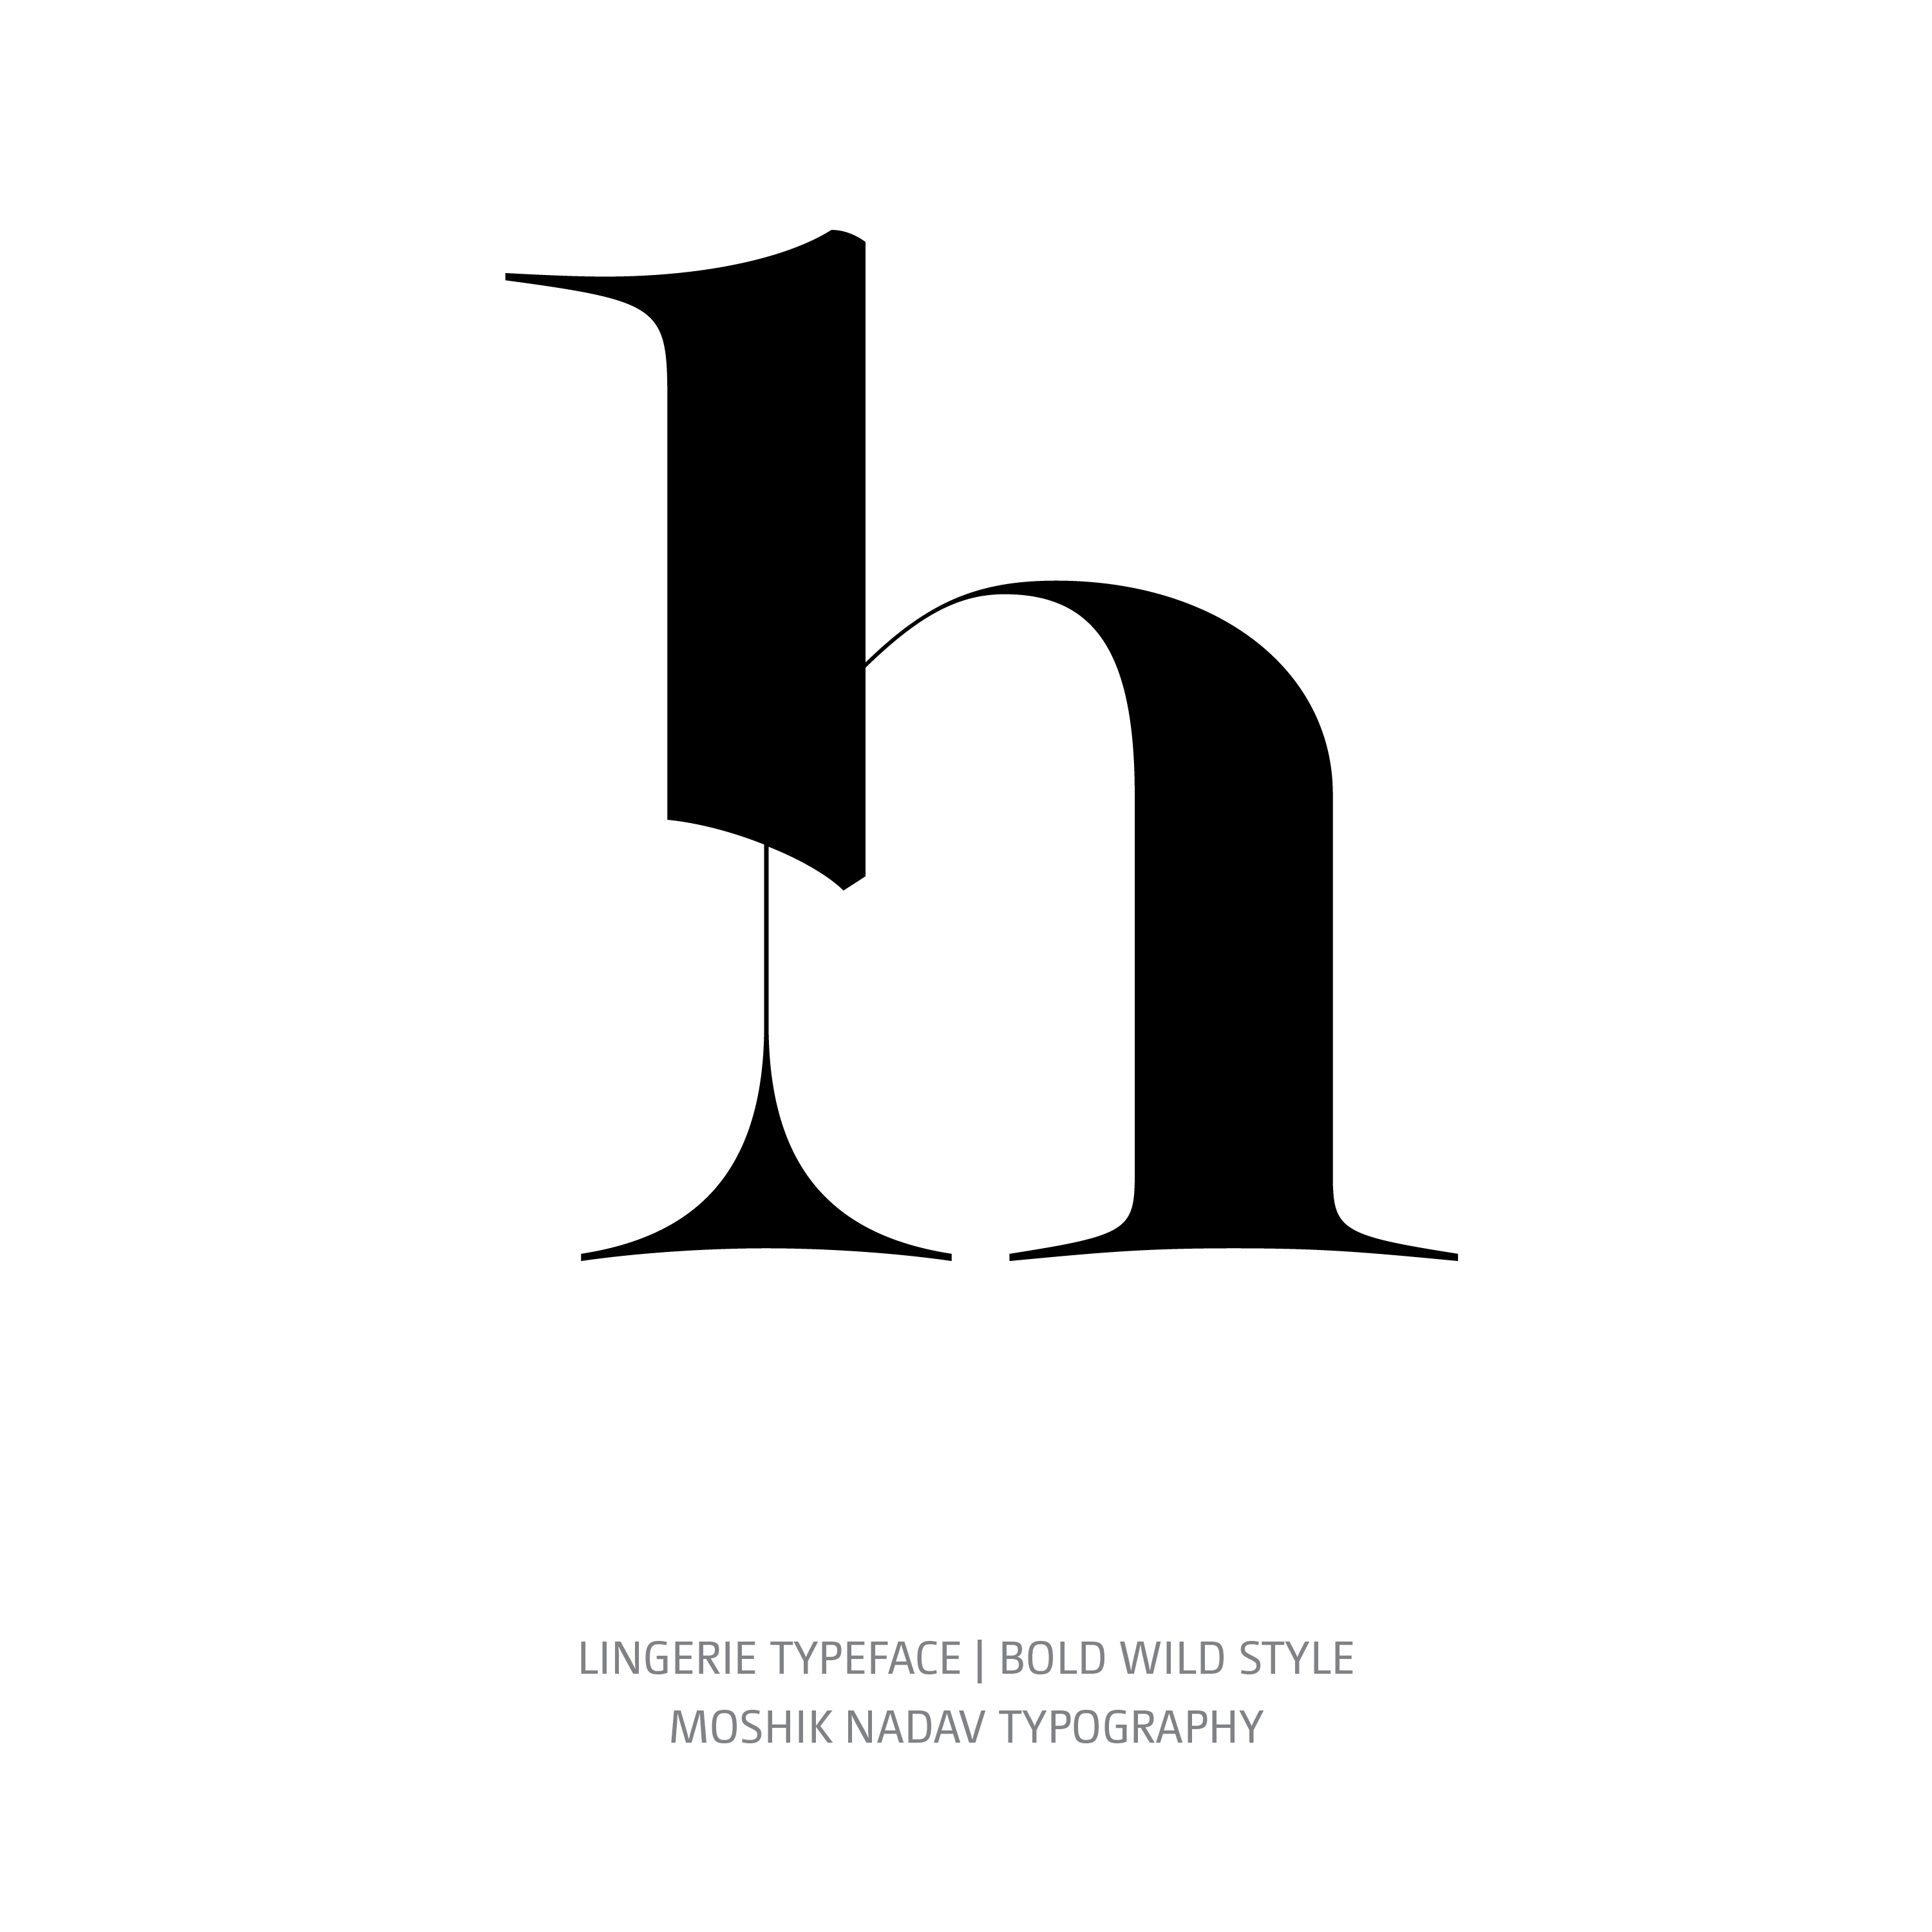 Lingerie Typeface Bold Wild h